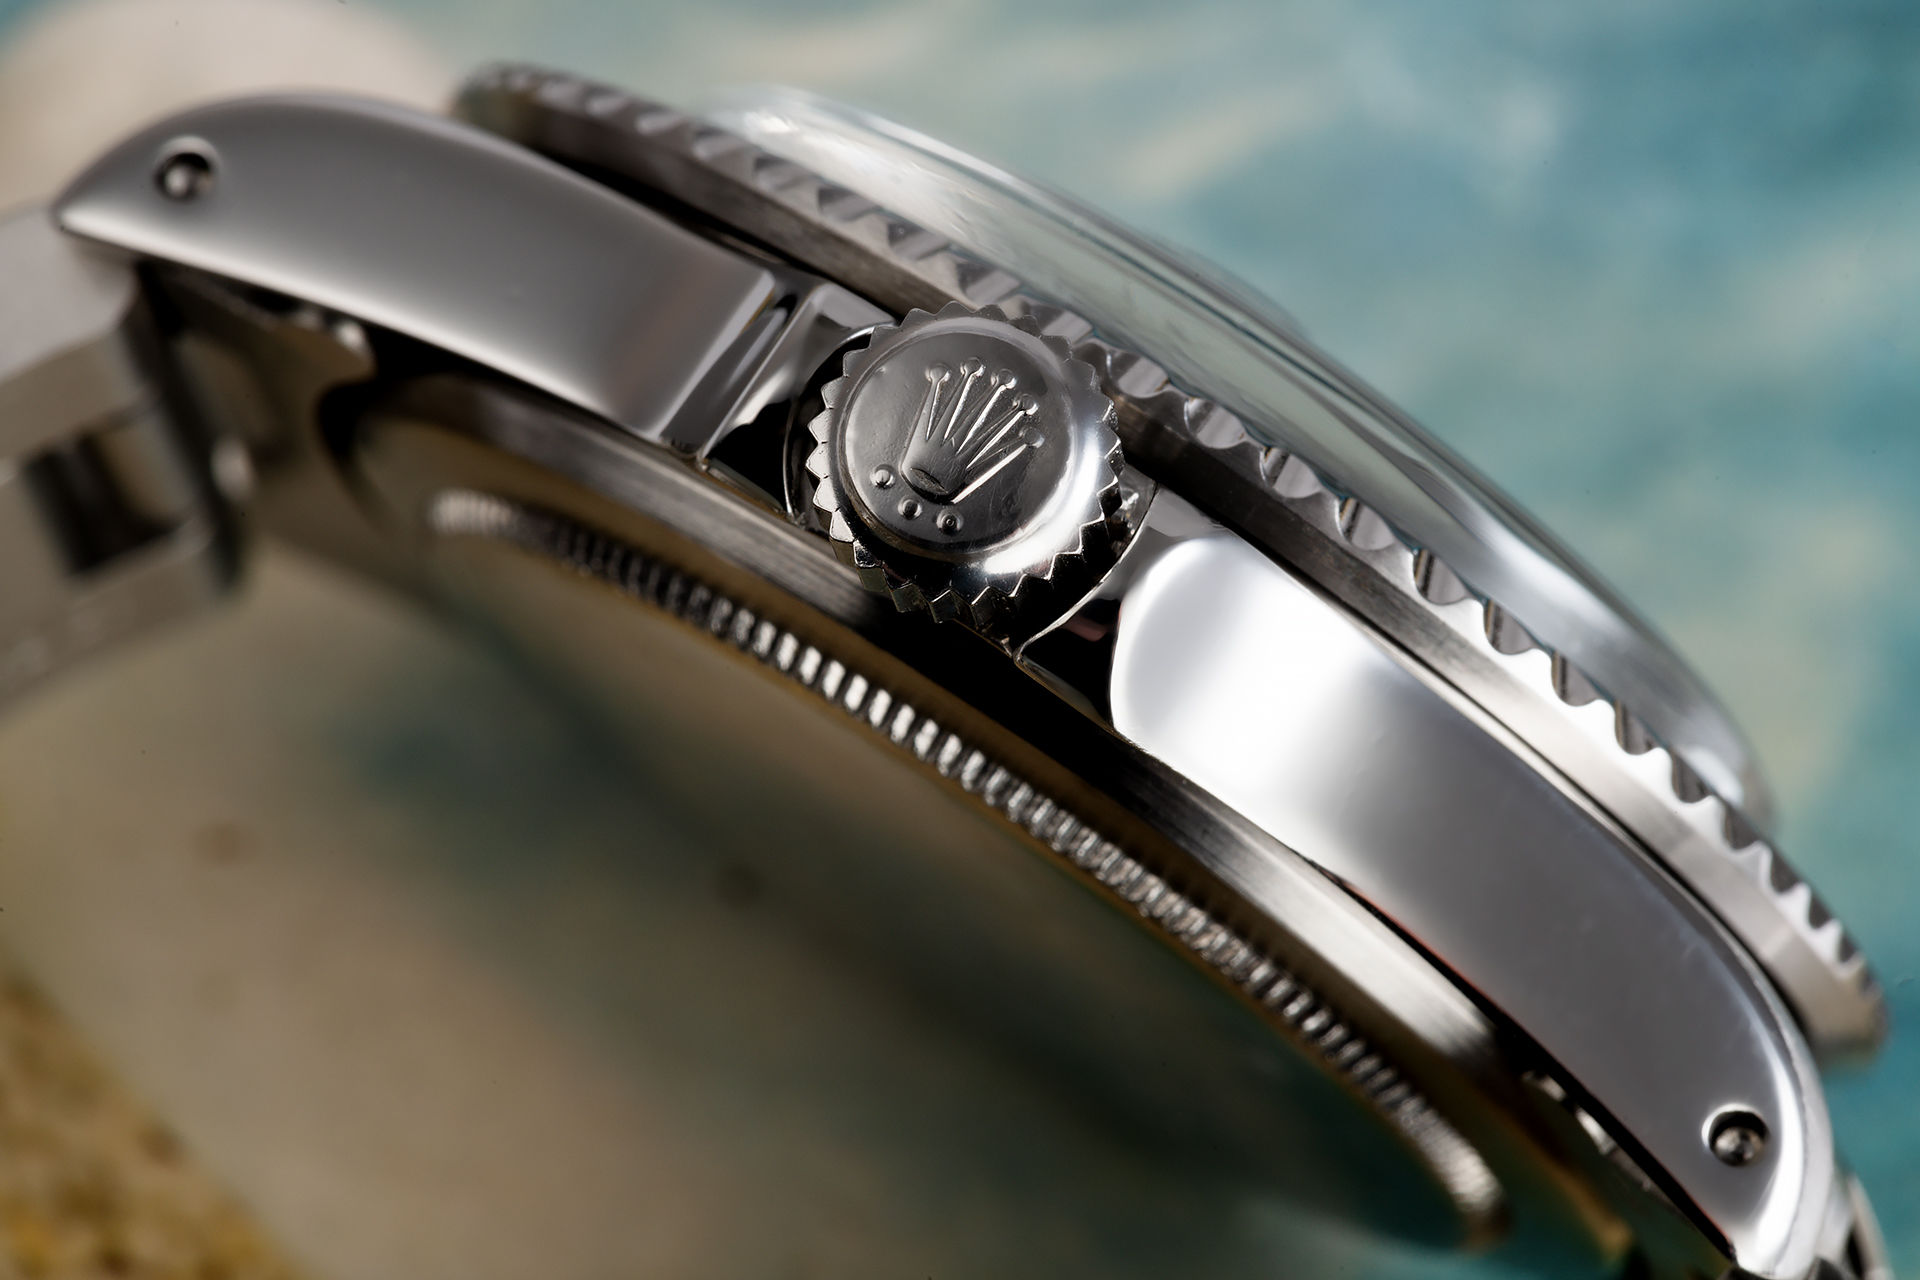 Rolex Submariner Date Watches | ref 1680 | Box & Certificate | The ...